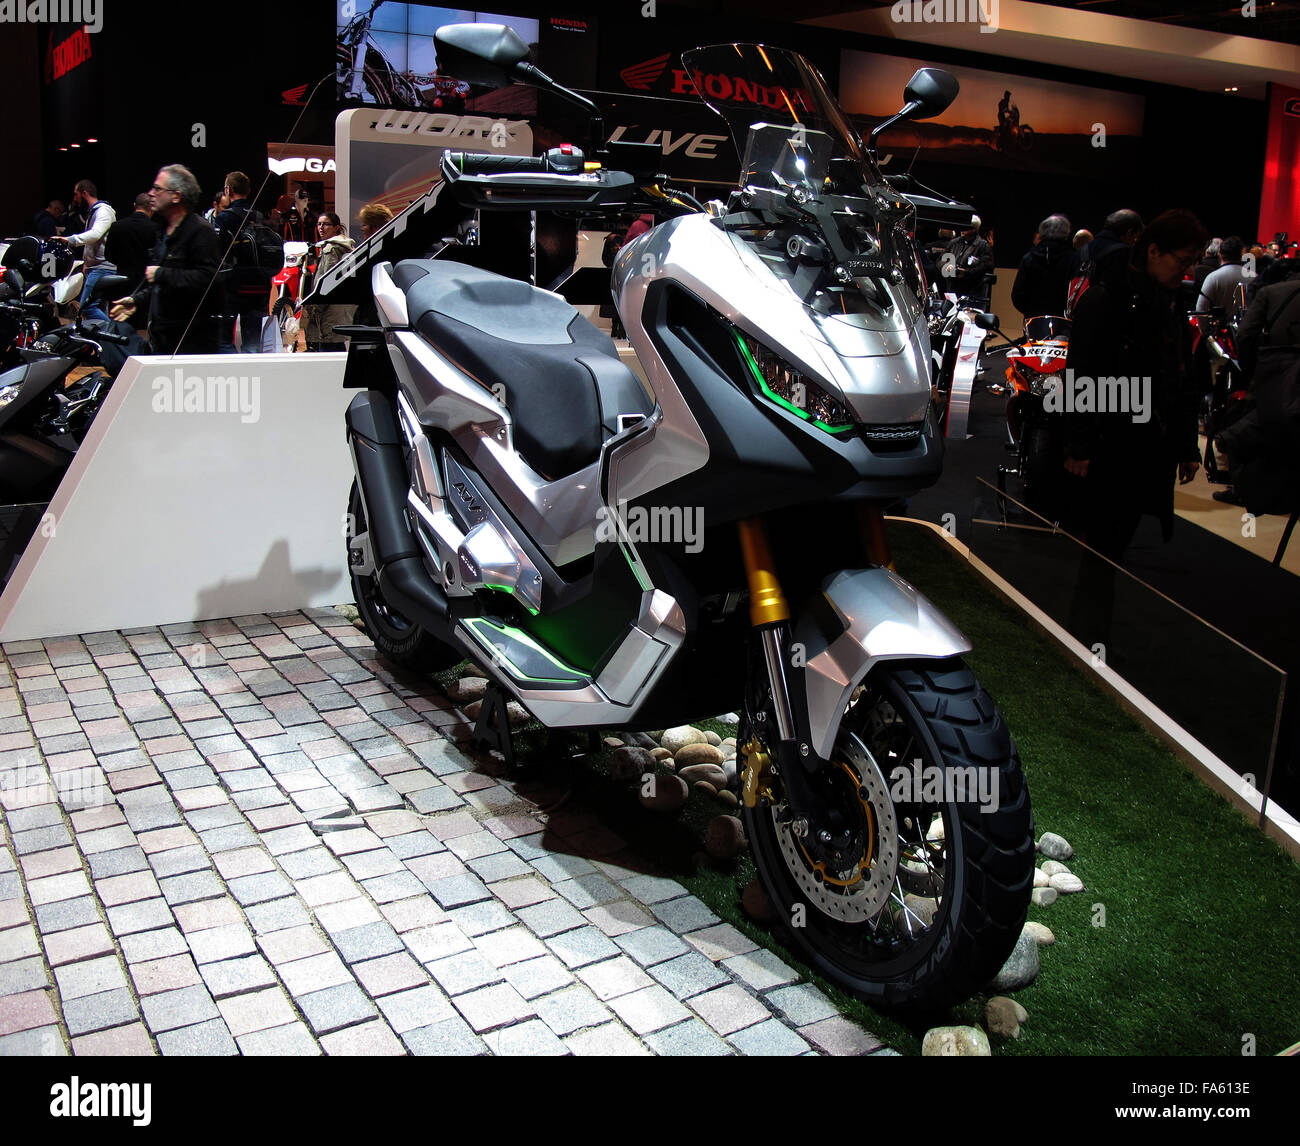 ADV Honda scooter concept,Paris Motorcycle Show,France Stock Photo - Alamy